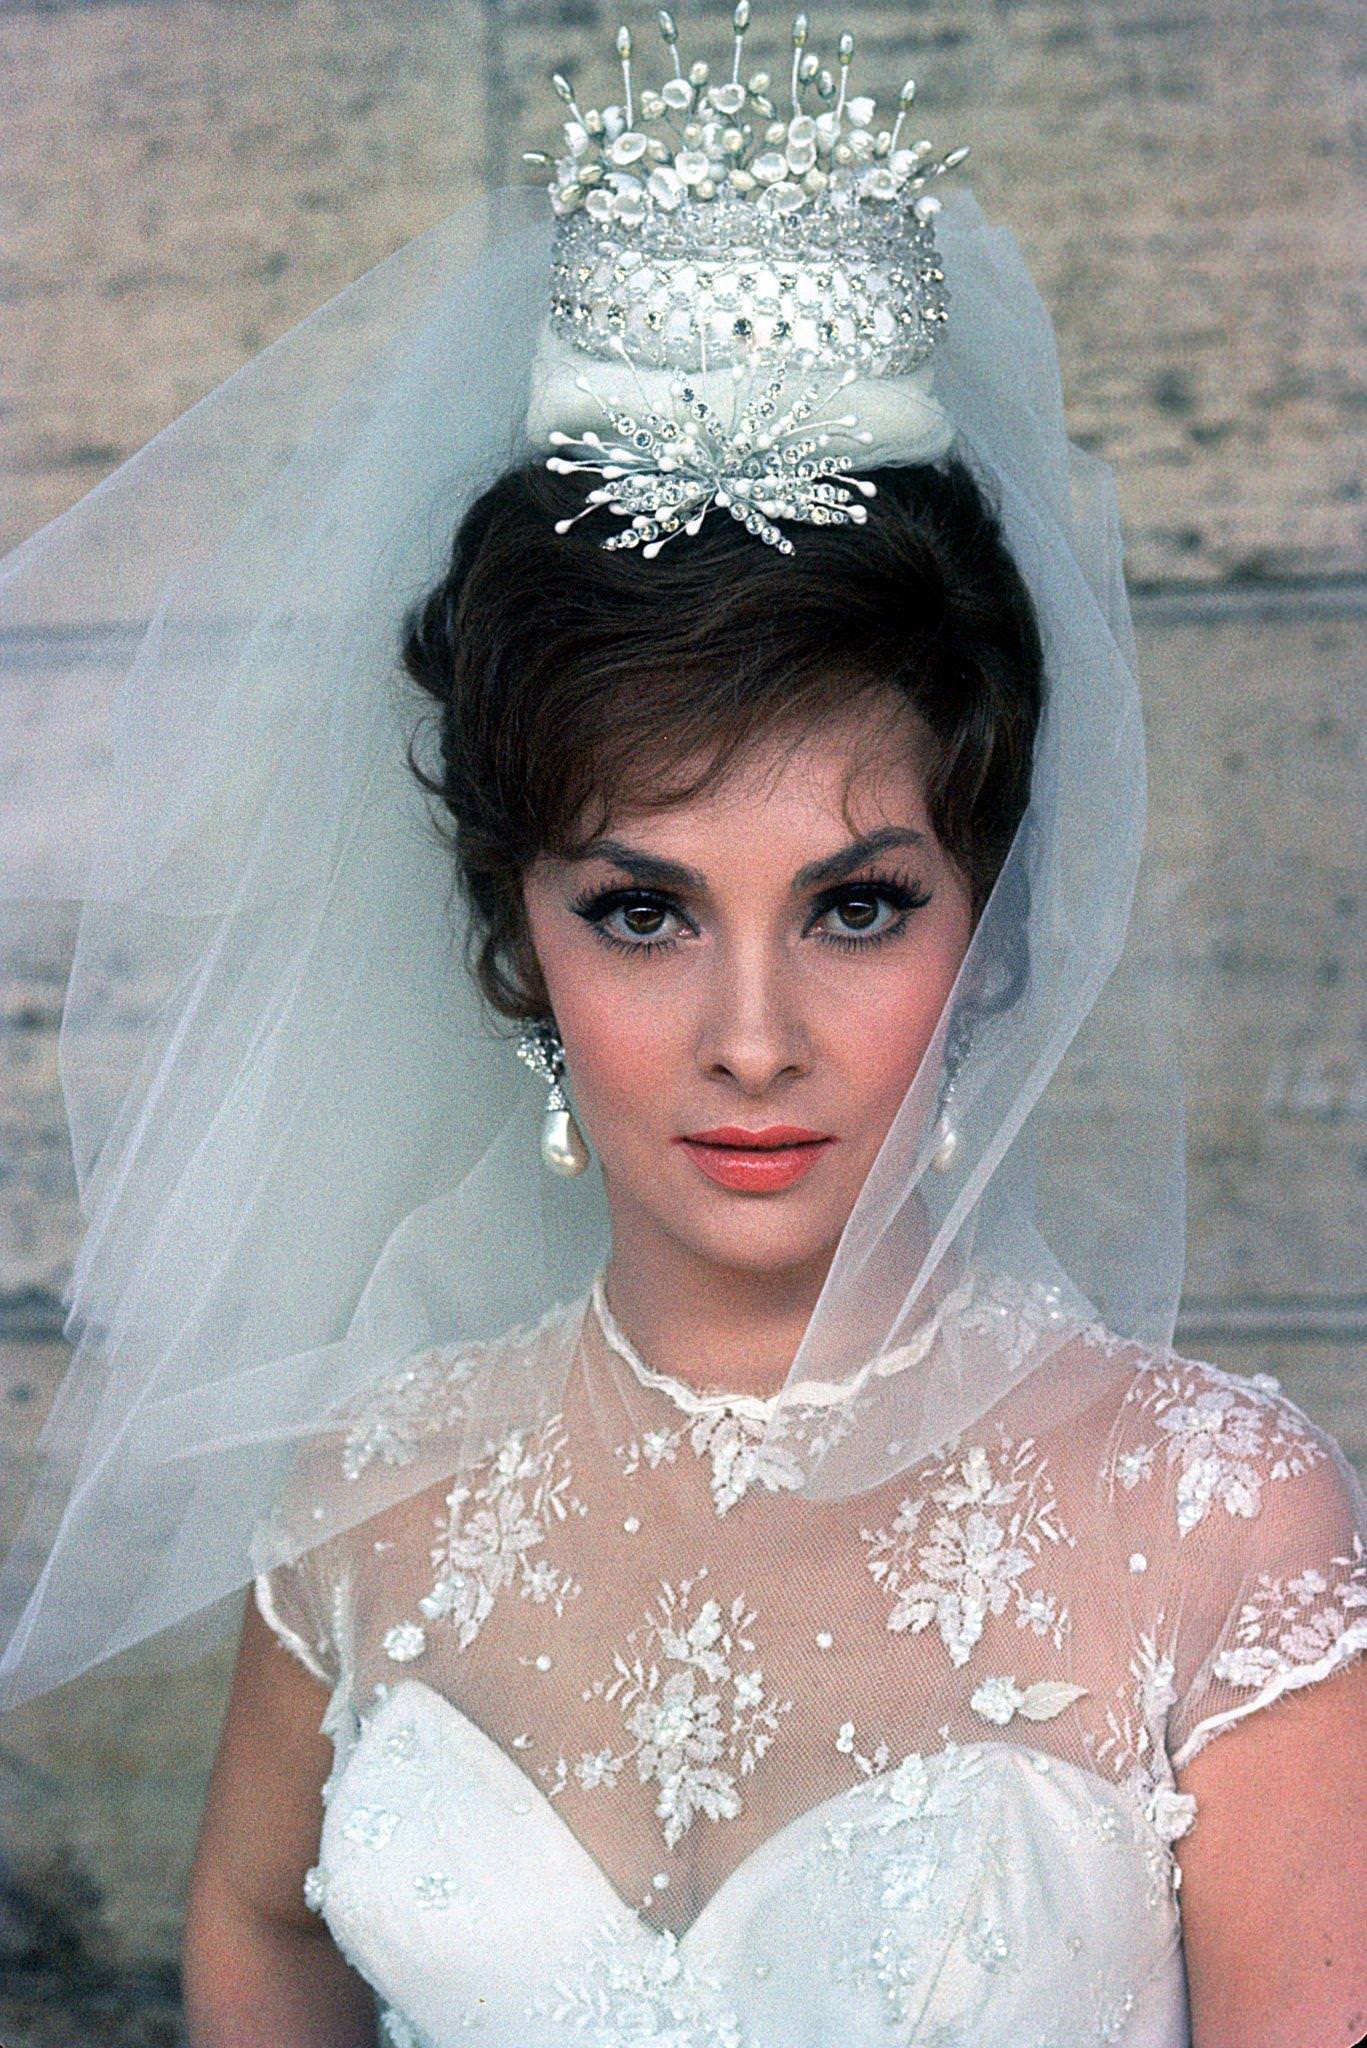 Gina Lollobrigida as a bride for "Come September" in Rome, Italy, 1960.